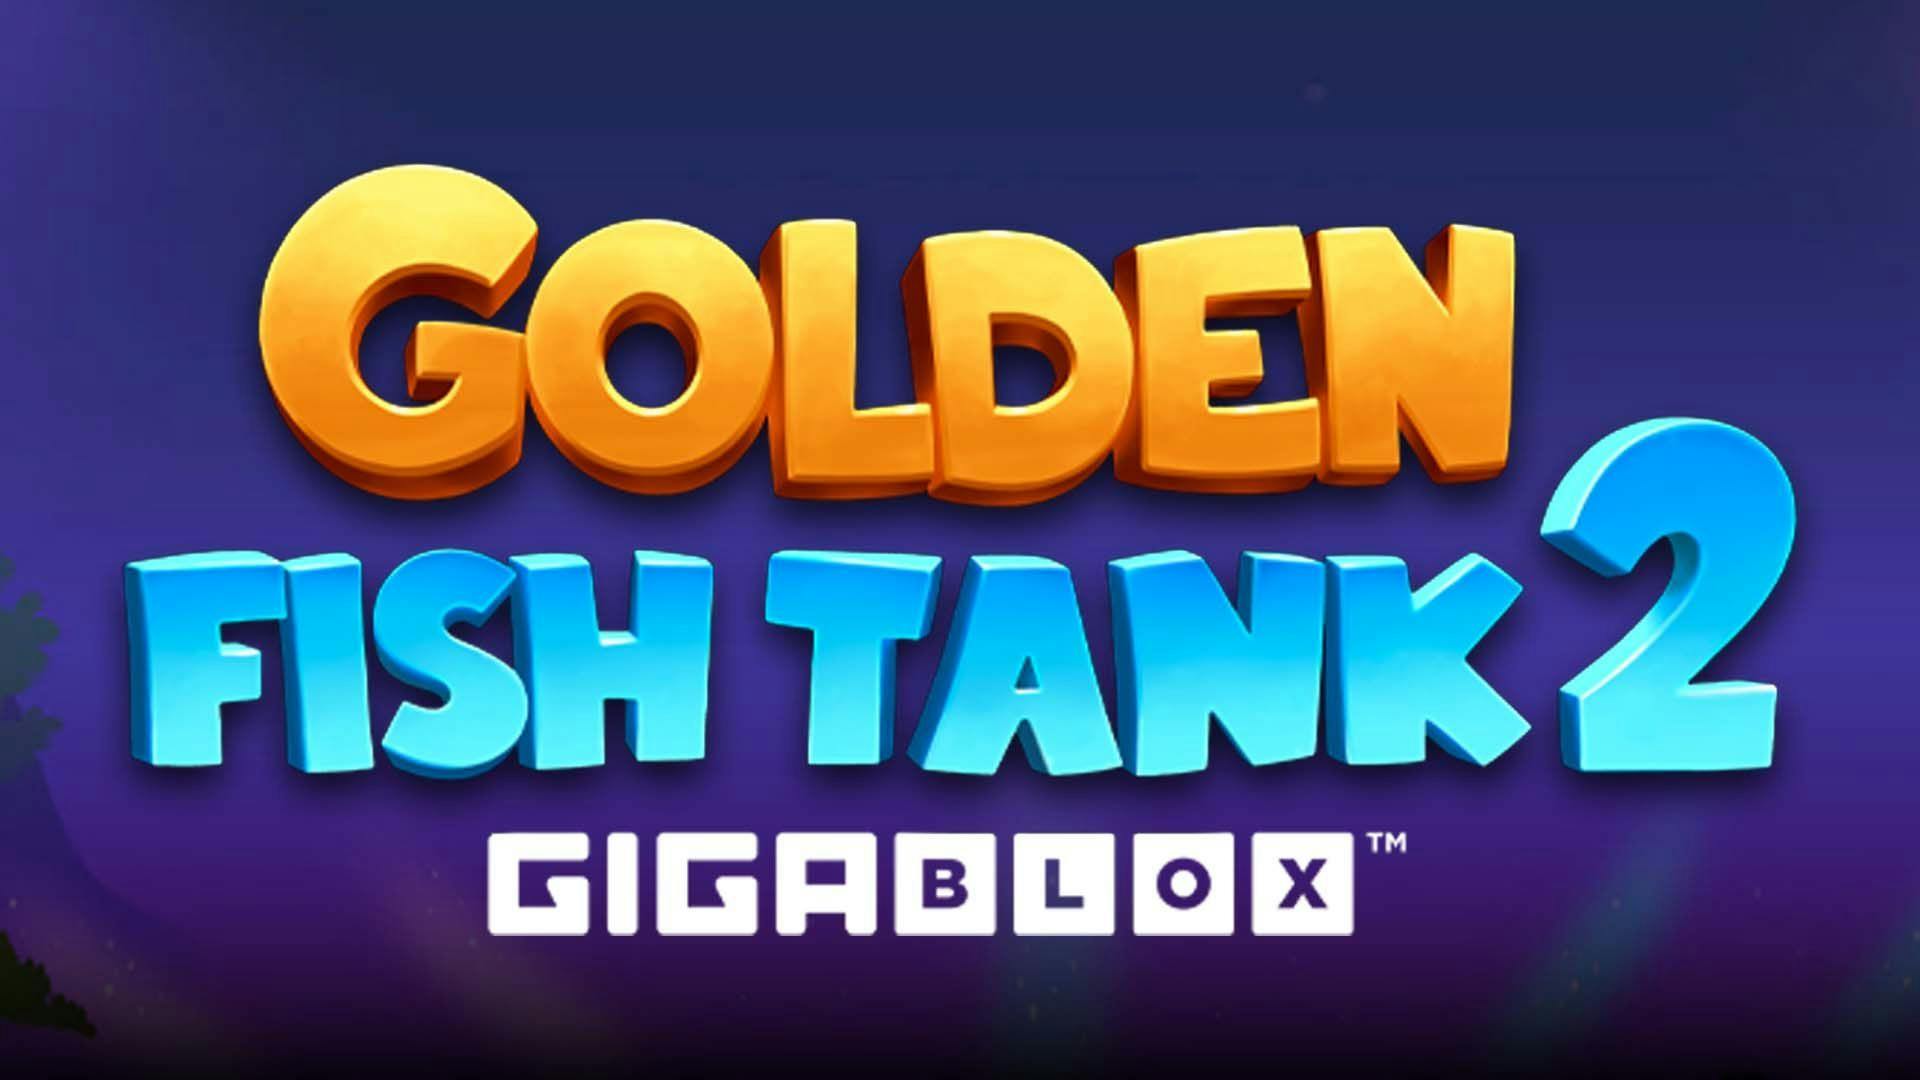 Golden Fish Tank 2 Gigablox Slot Online Free Game Play